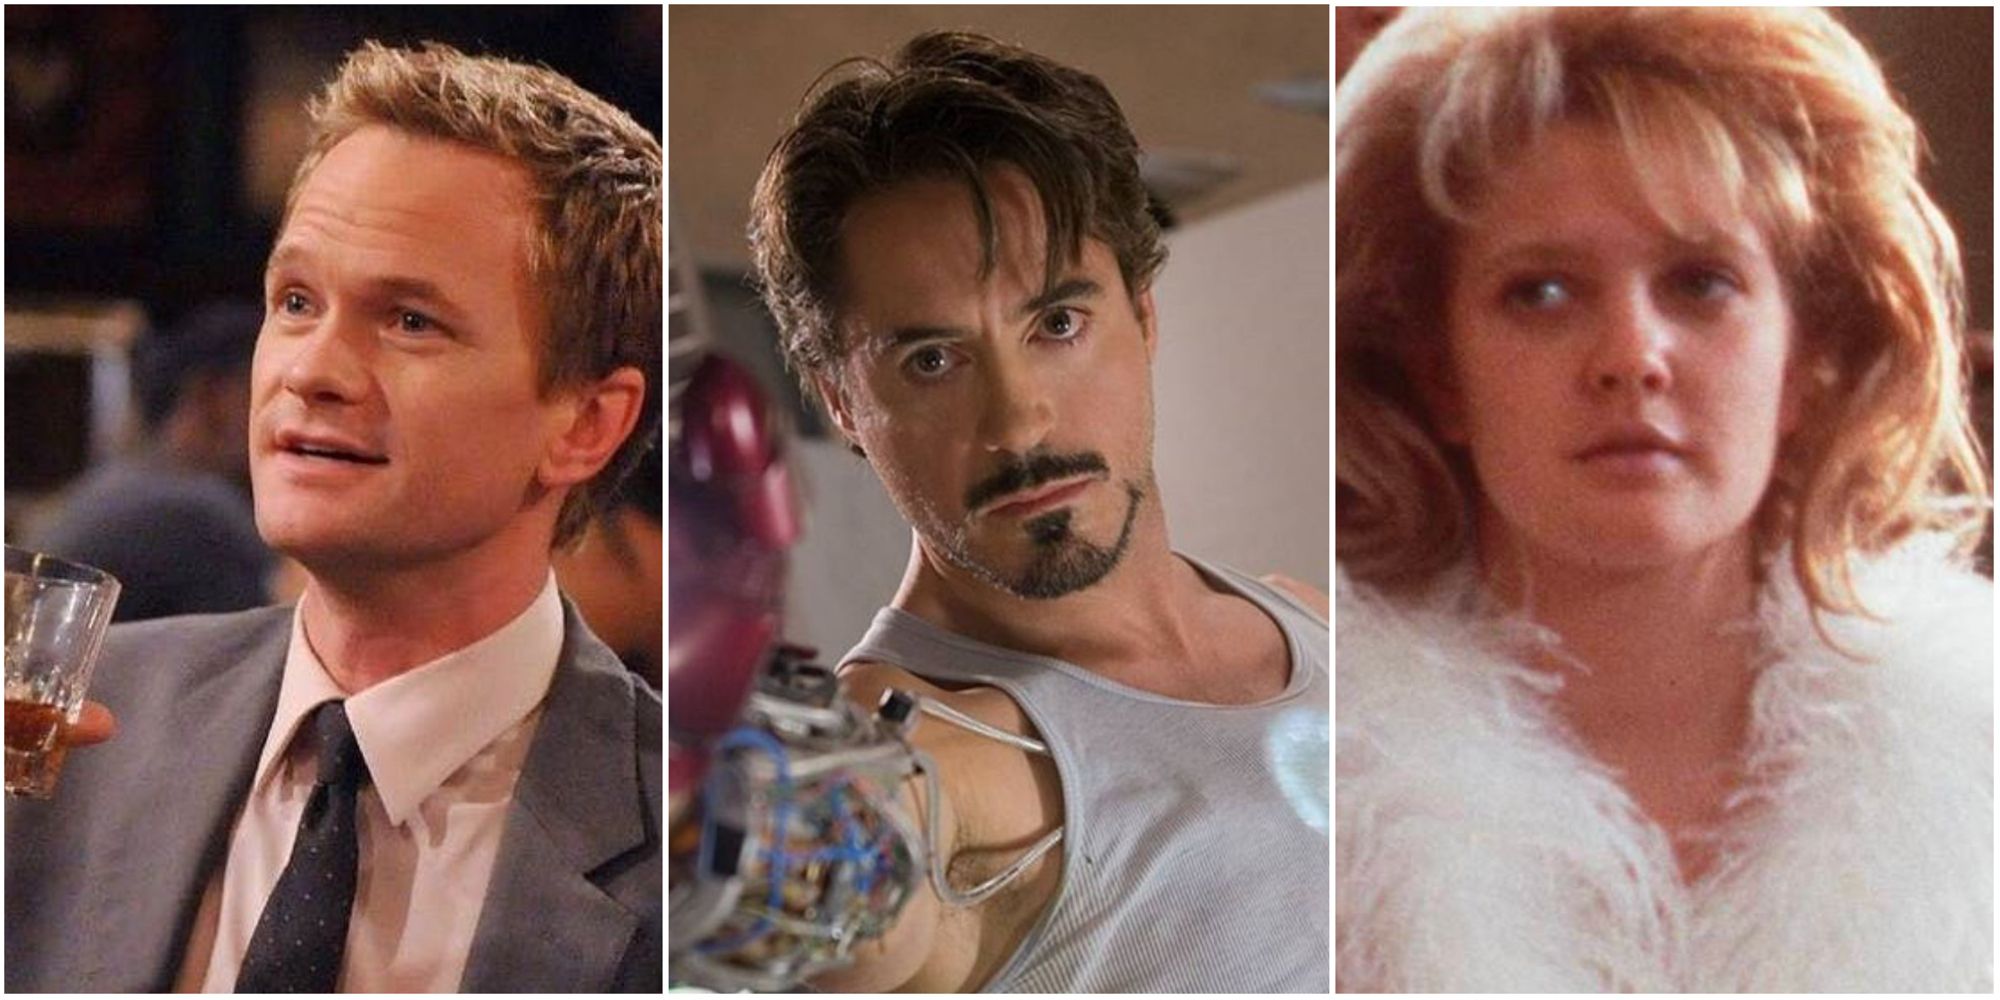 Neil Patrick Harris, Robert Downey Jr., and Drew Barrymore